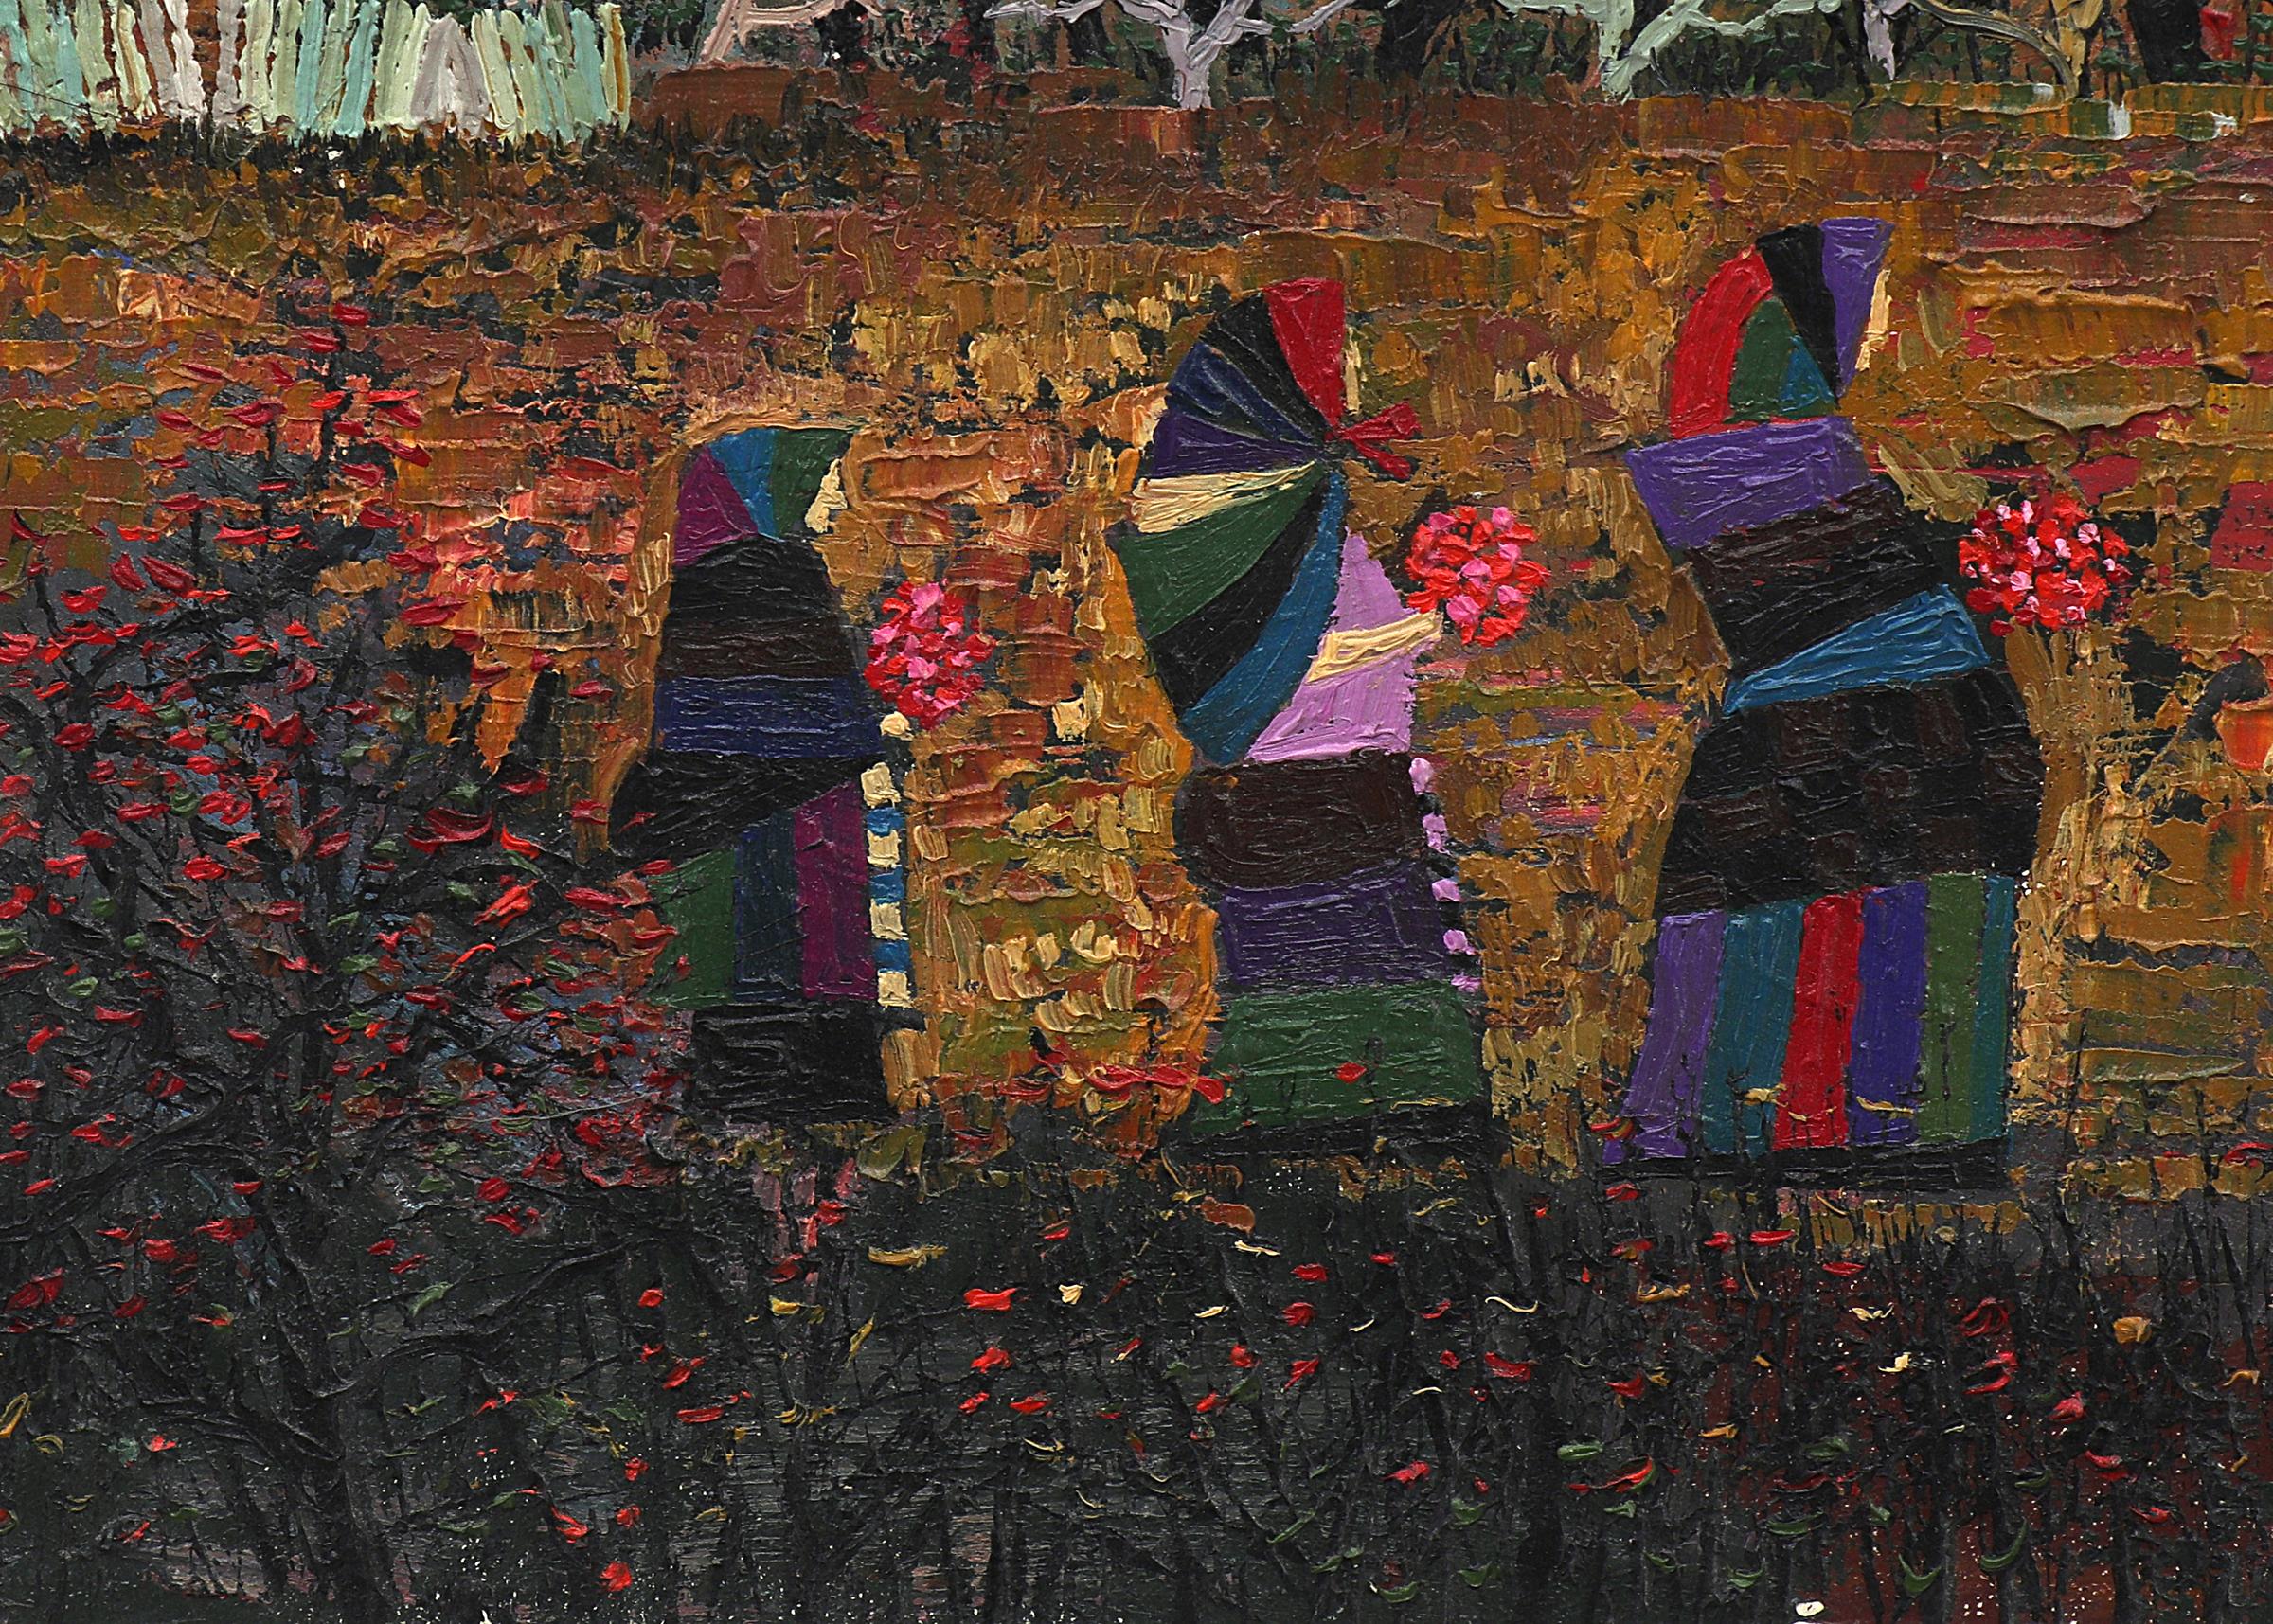 Autumn Harvest, Original Semi-Abstract Landscape and Figurative Oil Painting  - Black Landscape Painting by Edward Marecak